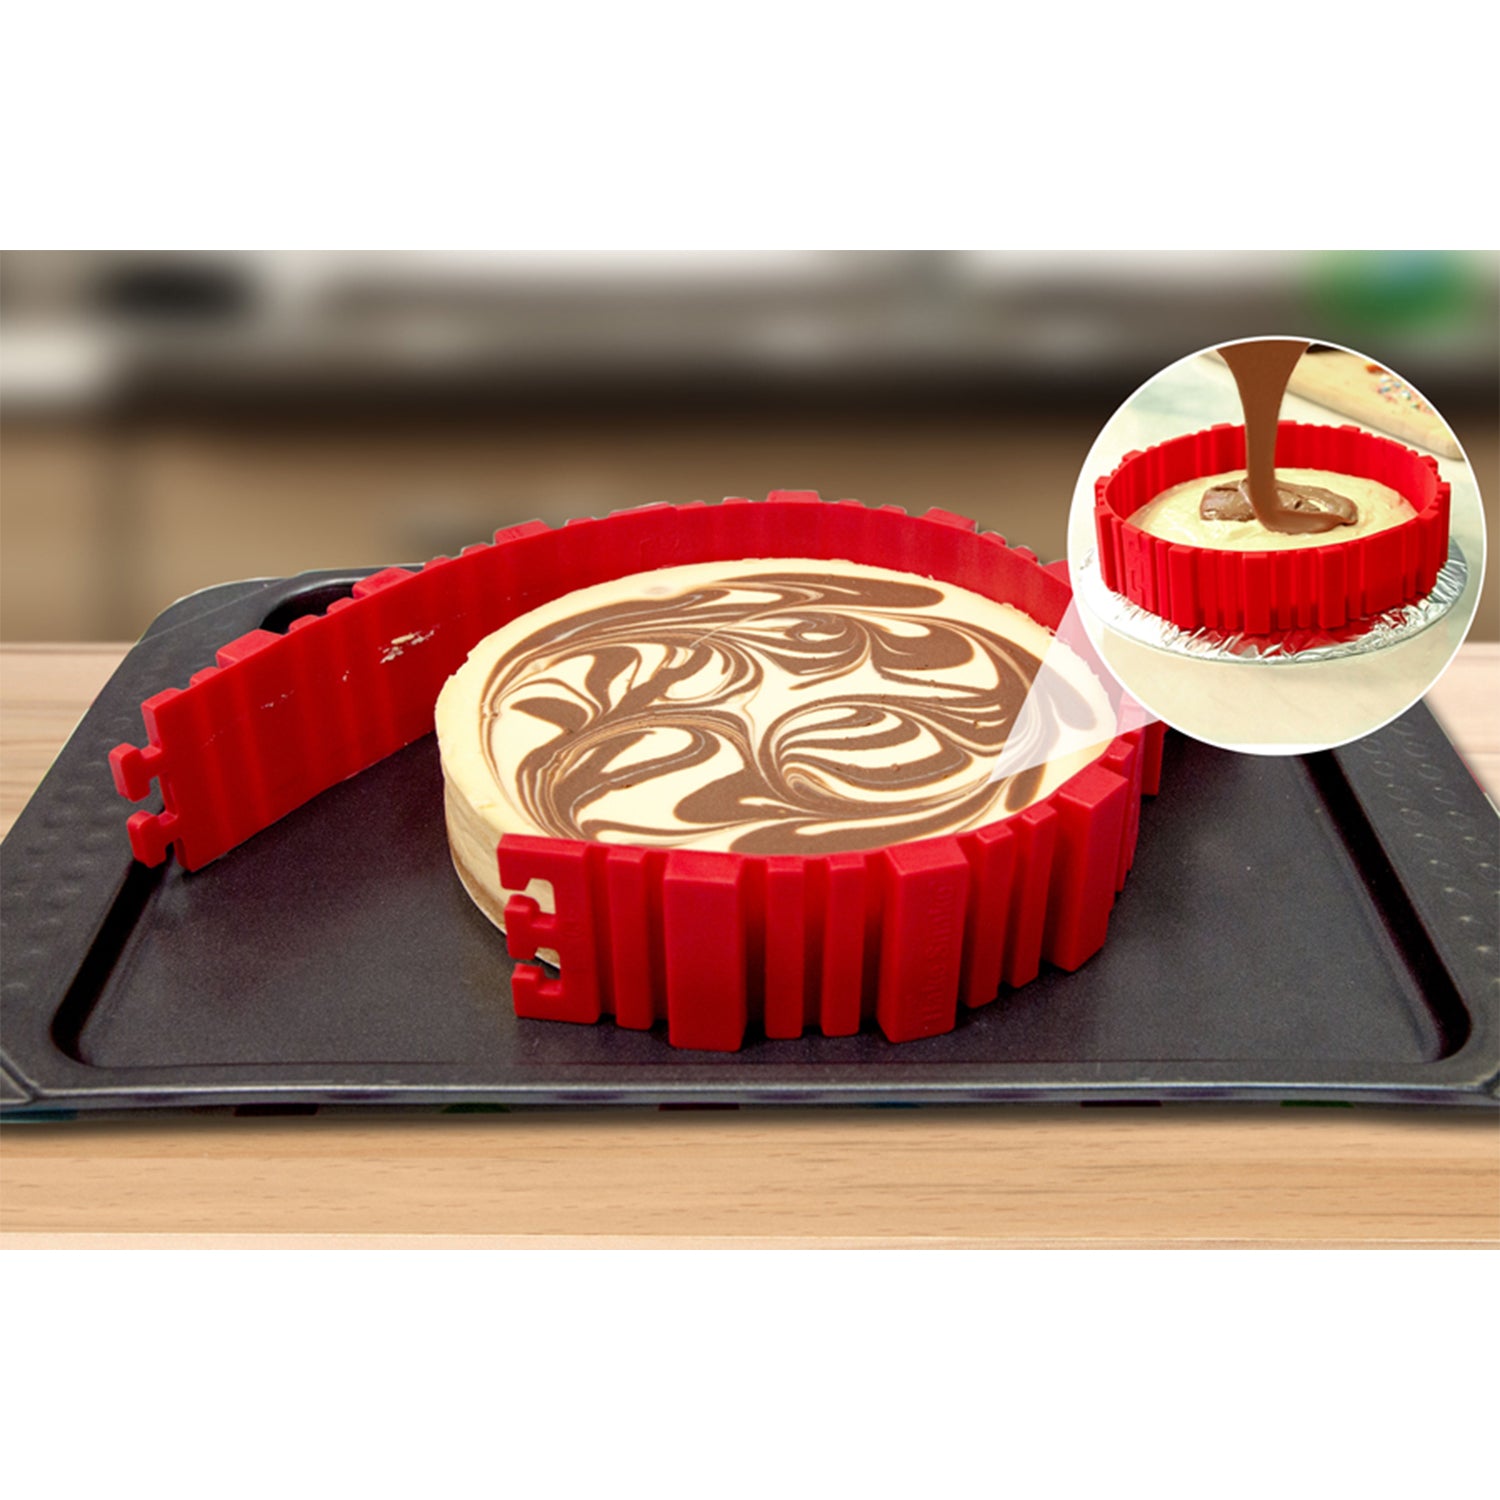 BAKE SNAKE*_ 4 Pcs Set Silicone Magic Snake Cake Mold DIY Baking Square  Rectangular Heart Shape Cake Mould Pastry Made of durable food… | Instagram